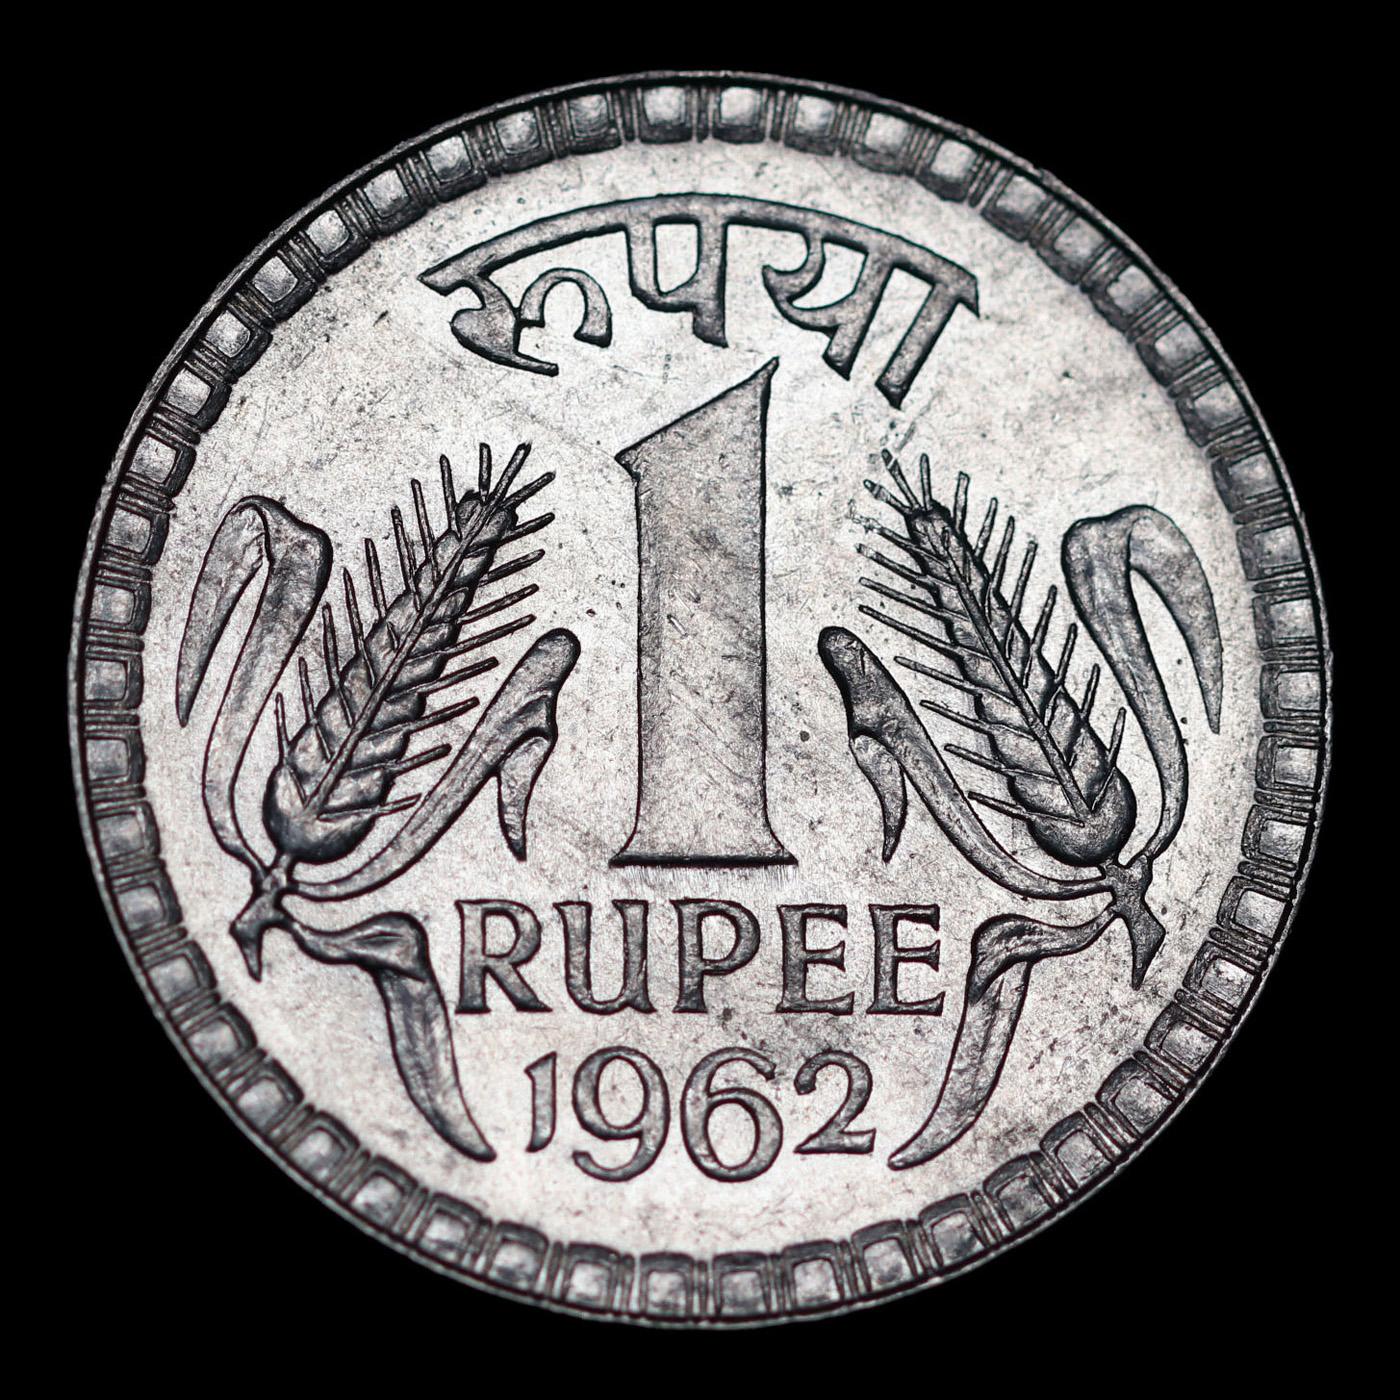 1962C India (Republic) Rupee KM# 75.1 Grades Choice AU/BU Slider